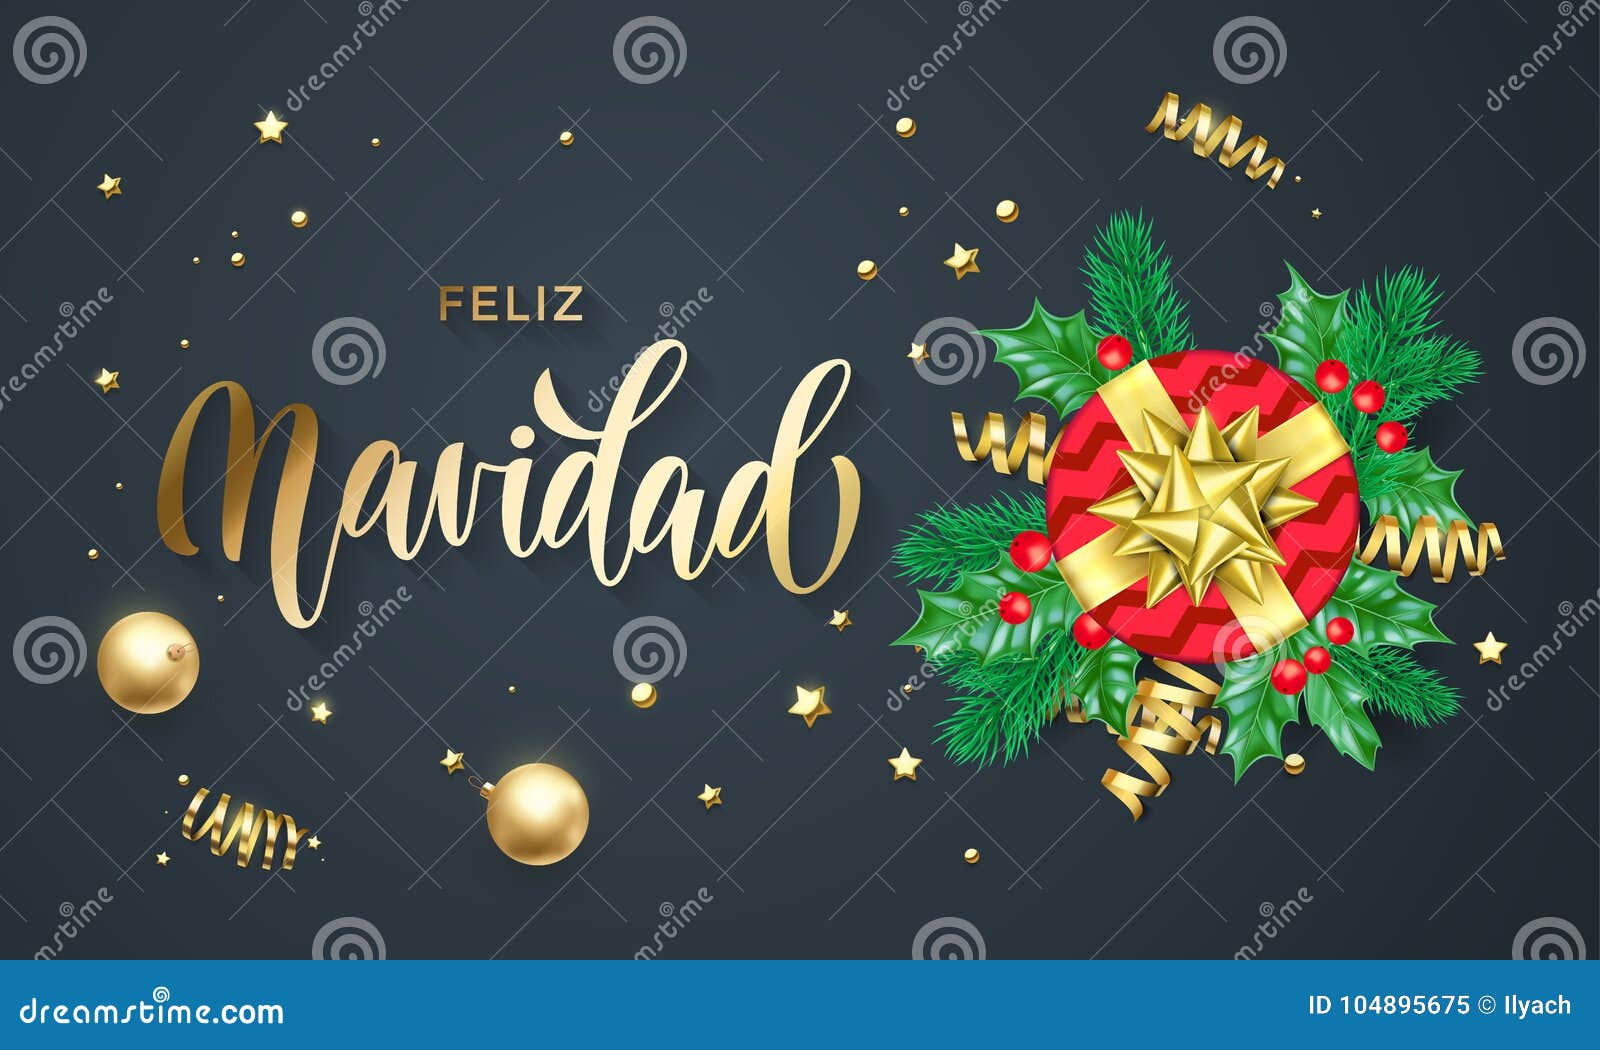 feliz navidad spanish merry christmas holiday golden calligraphy and gold decoration greeting card template.  christmas tree